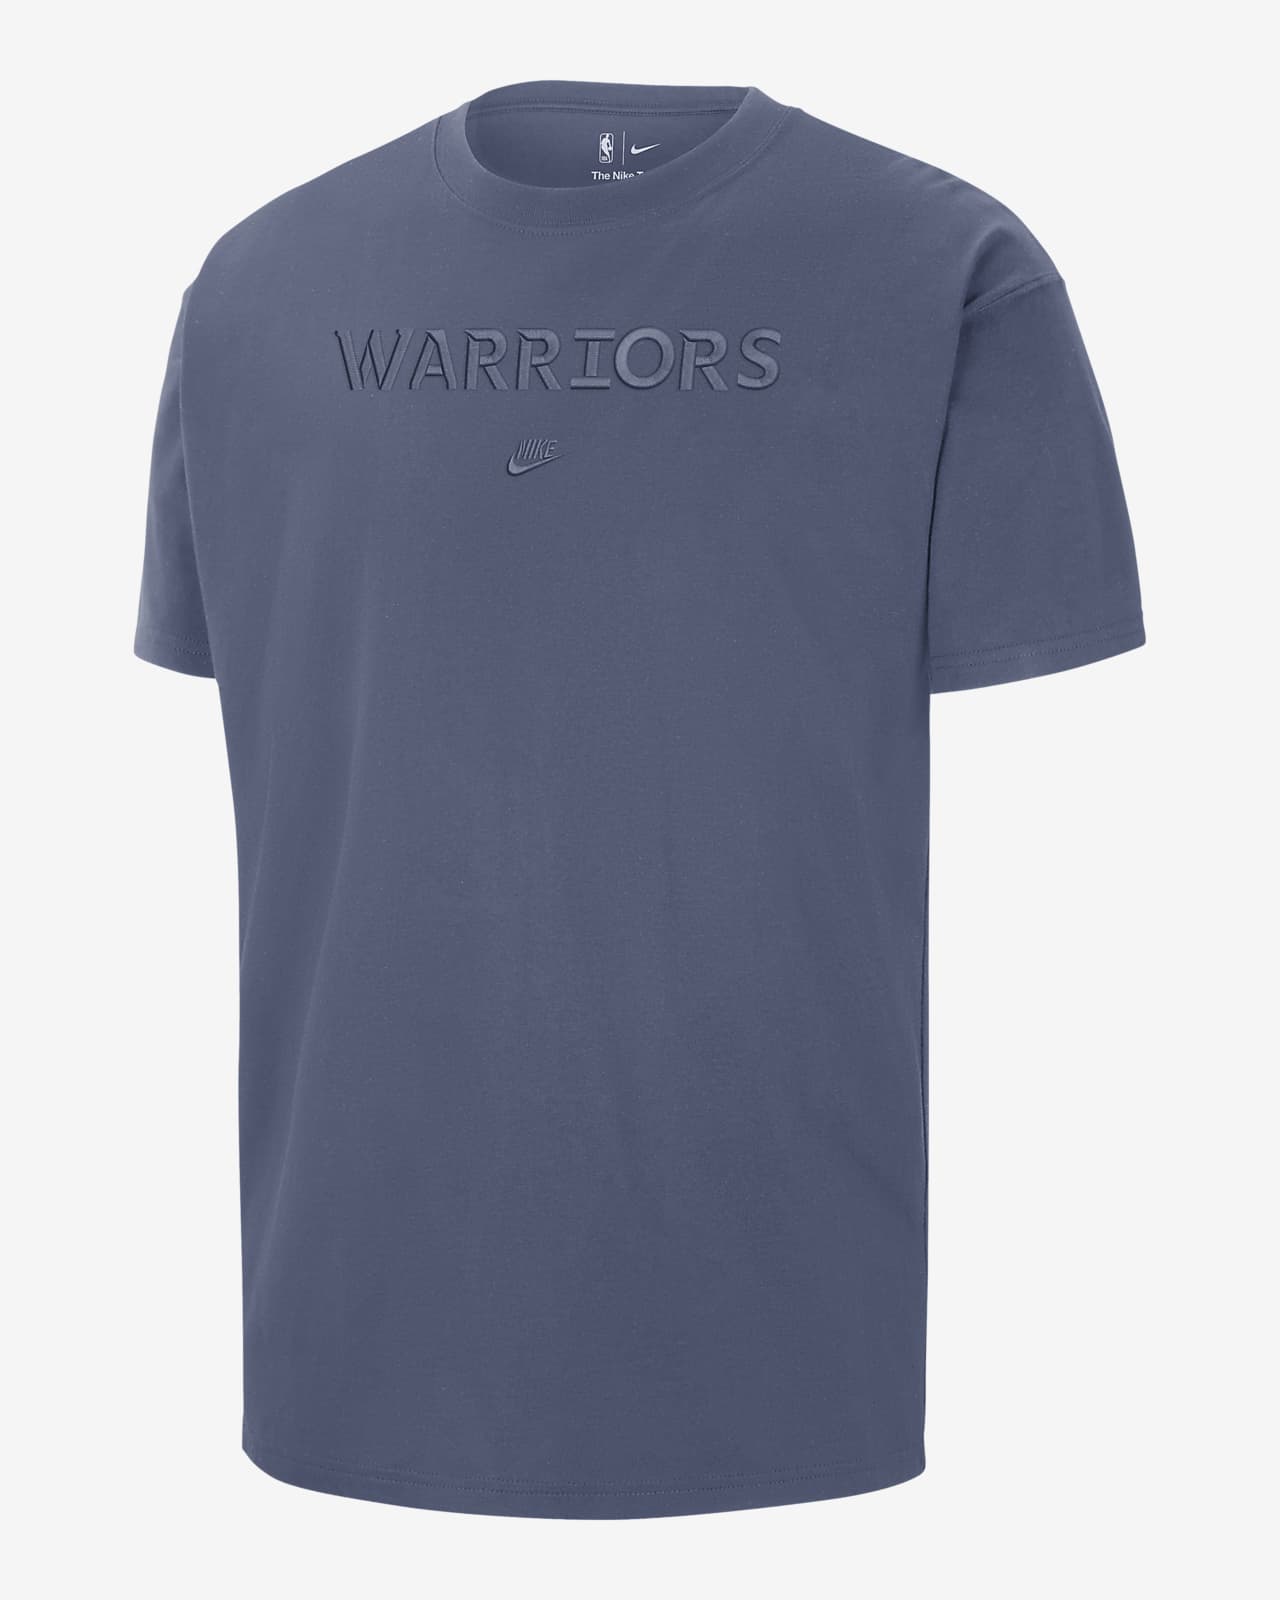 Nike Dri-Fit NBA Golden State Warriors Womens Medium T-shirt